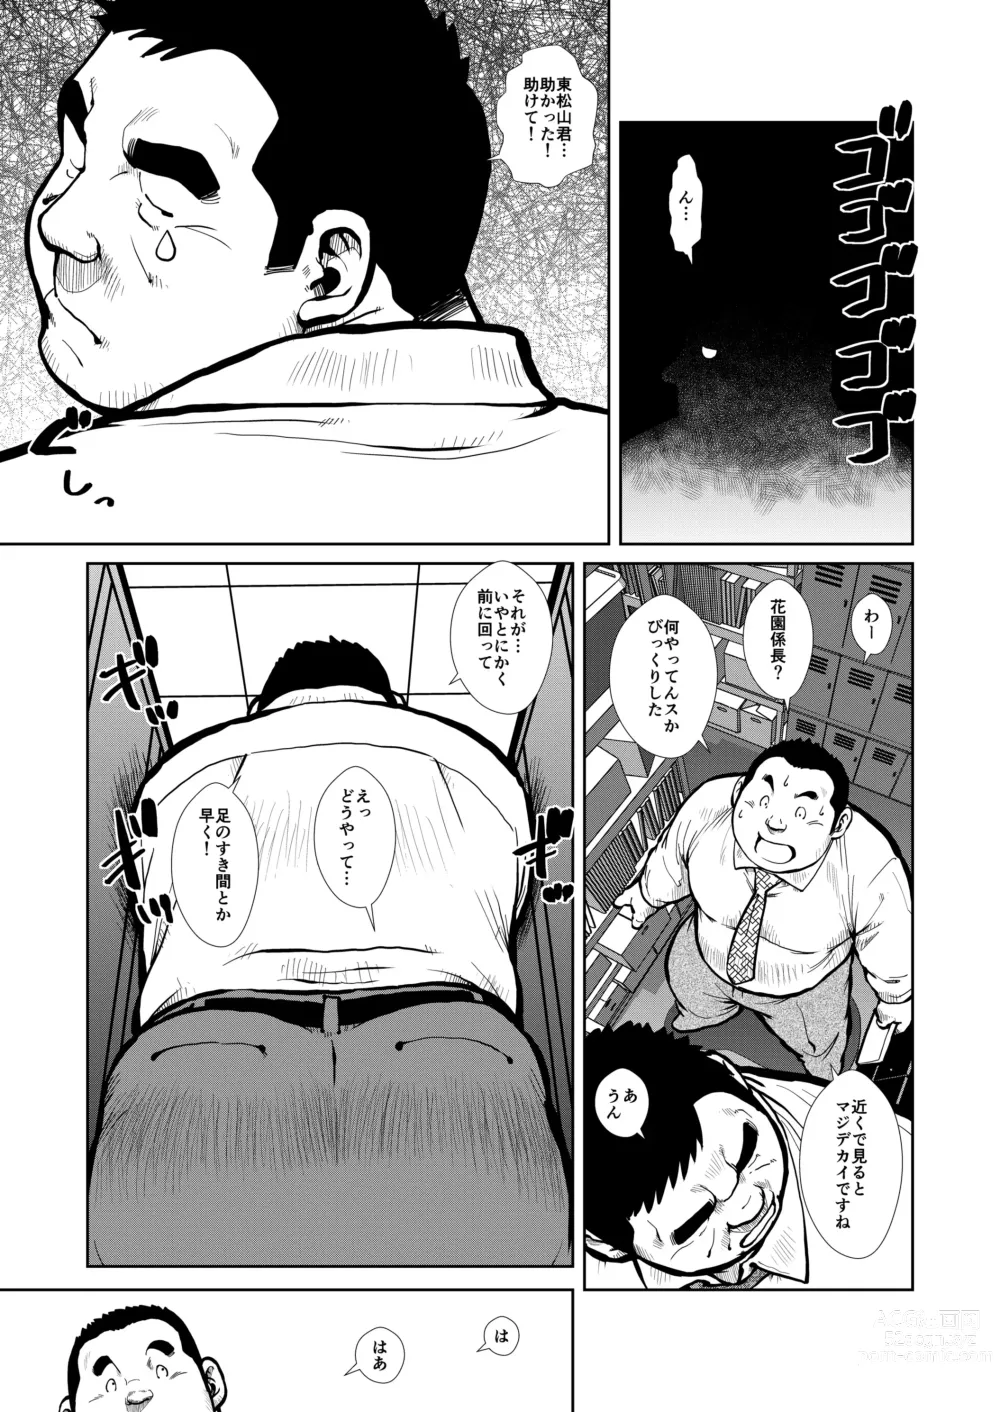 Page 3 of doujinshi Sandwichman no Yuuutsu